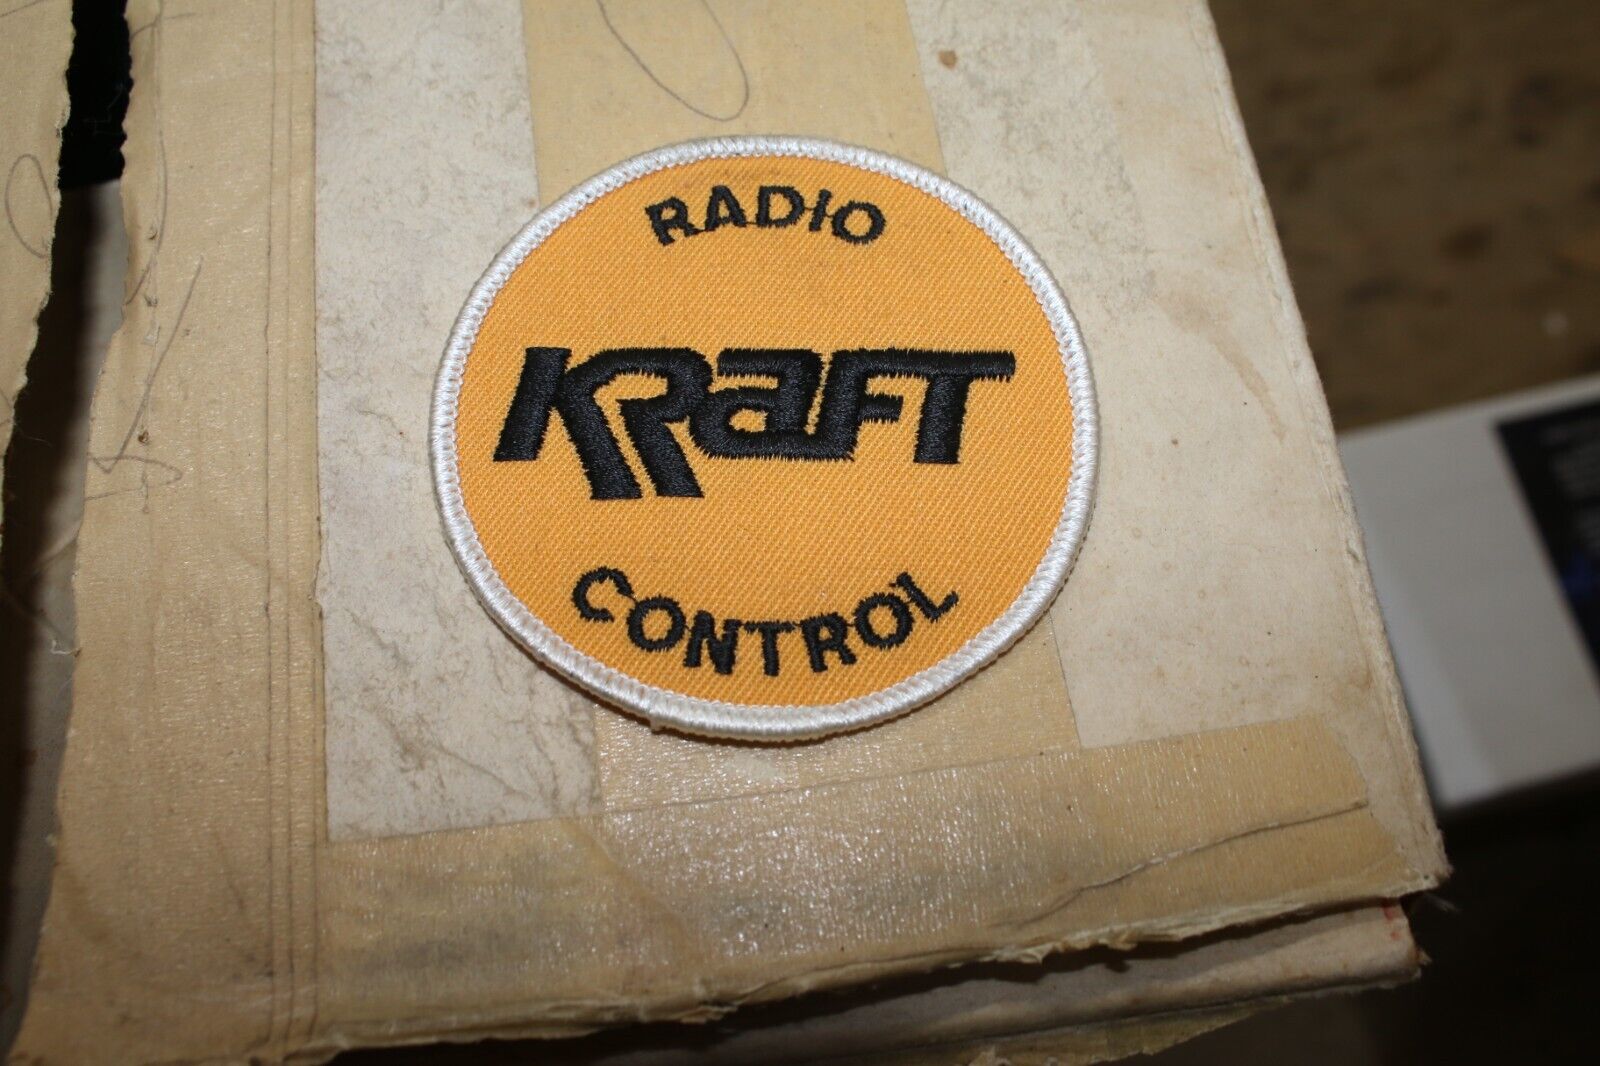 Vintage kraft Transmitter patch